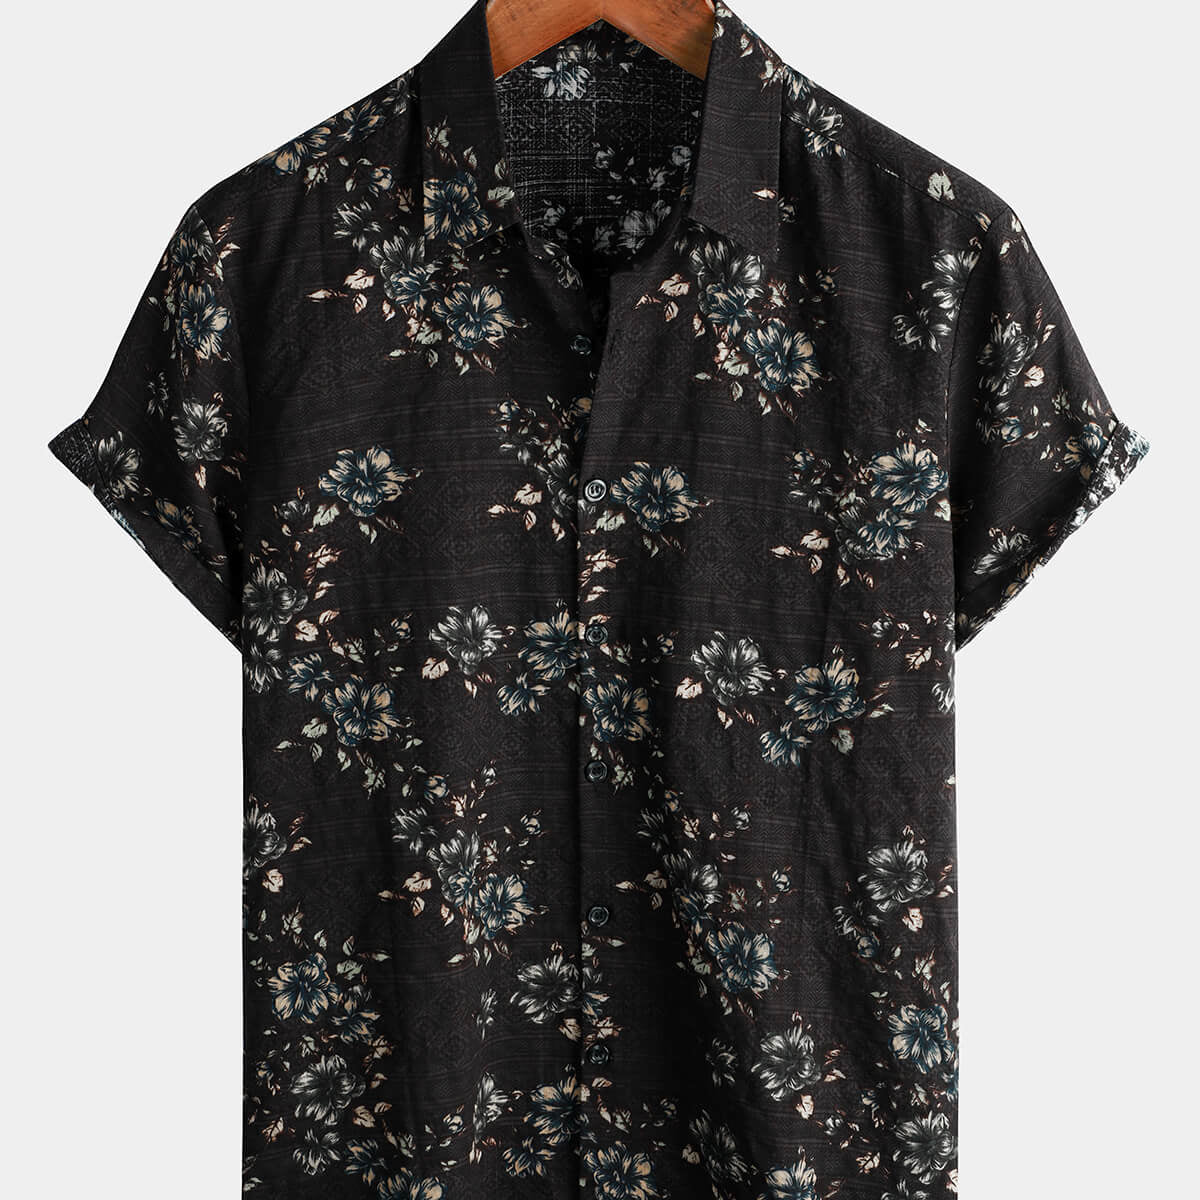 Men's Floral Cotton Short Sleeve Button Up Black Hawaiian Holiday Shirt